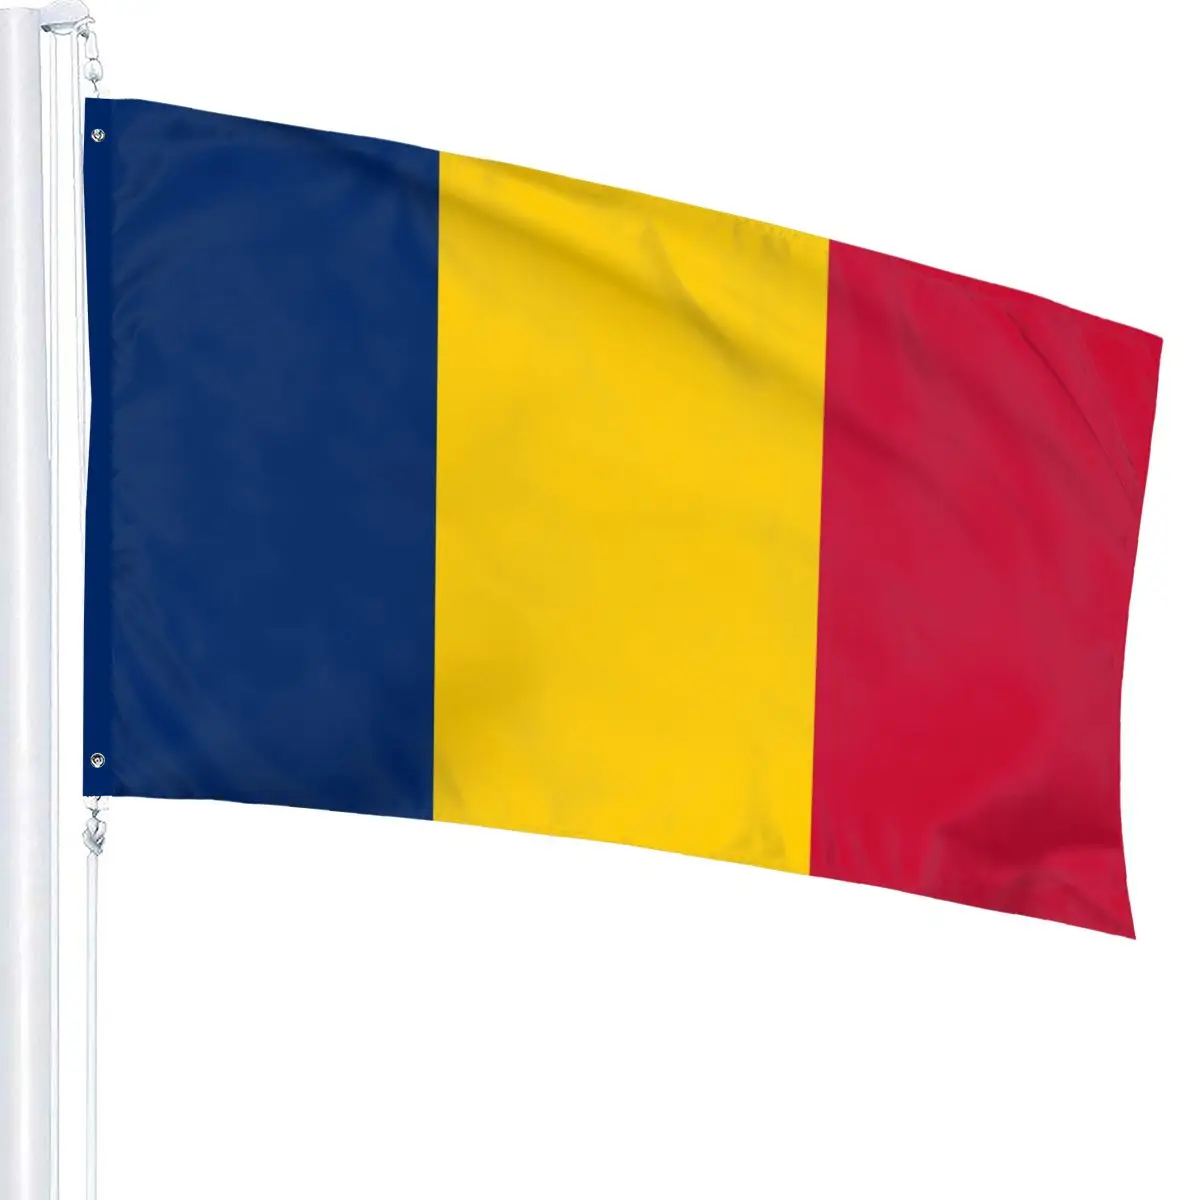 Blauw Geel Rood Rou Roemenië Vlag 90x150cm|Vlaggen, banners en accessoires| AliExpress